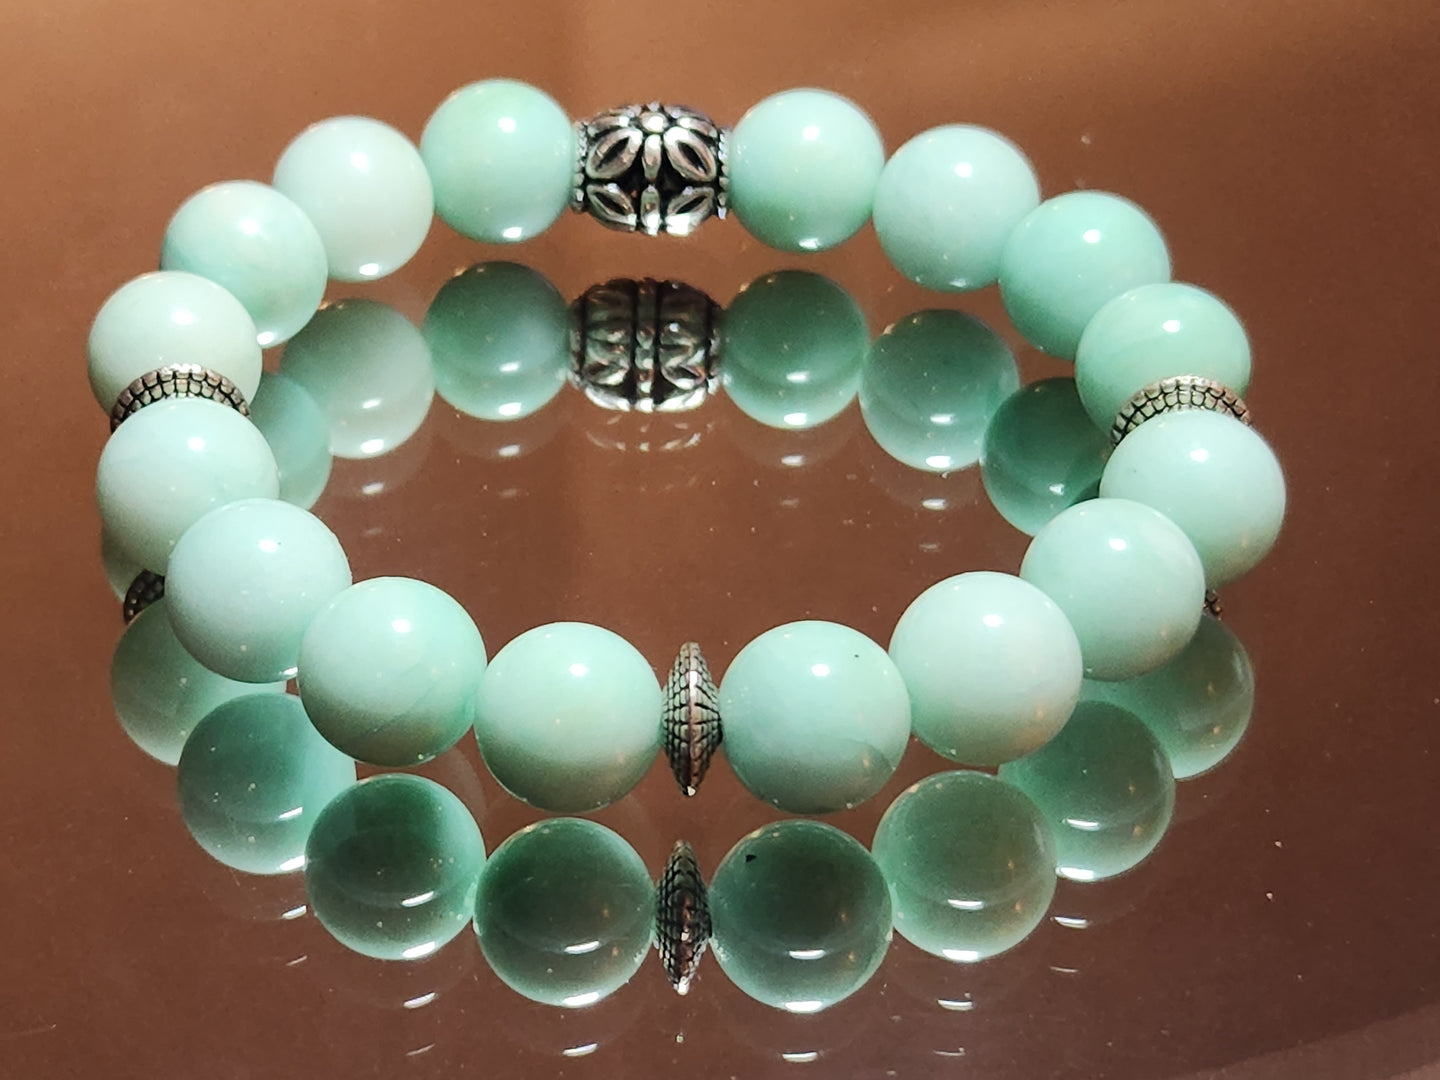 Turquoise Stone Bracelet - Stone of the Sky